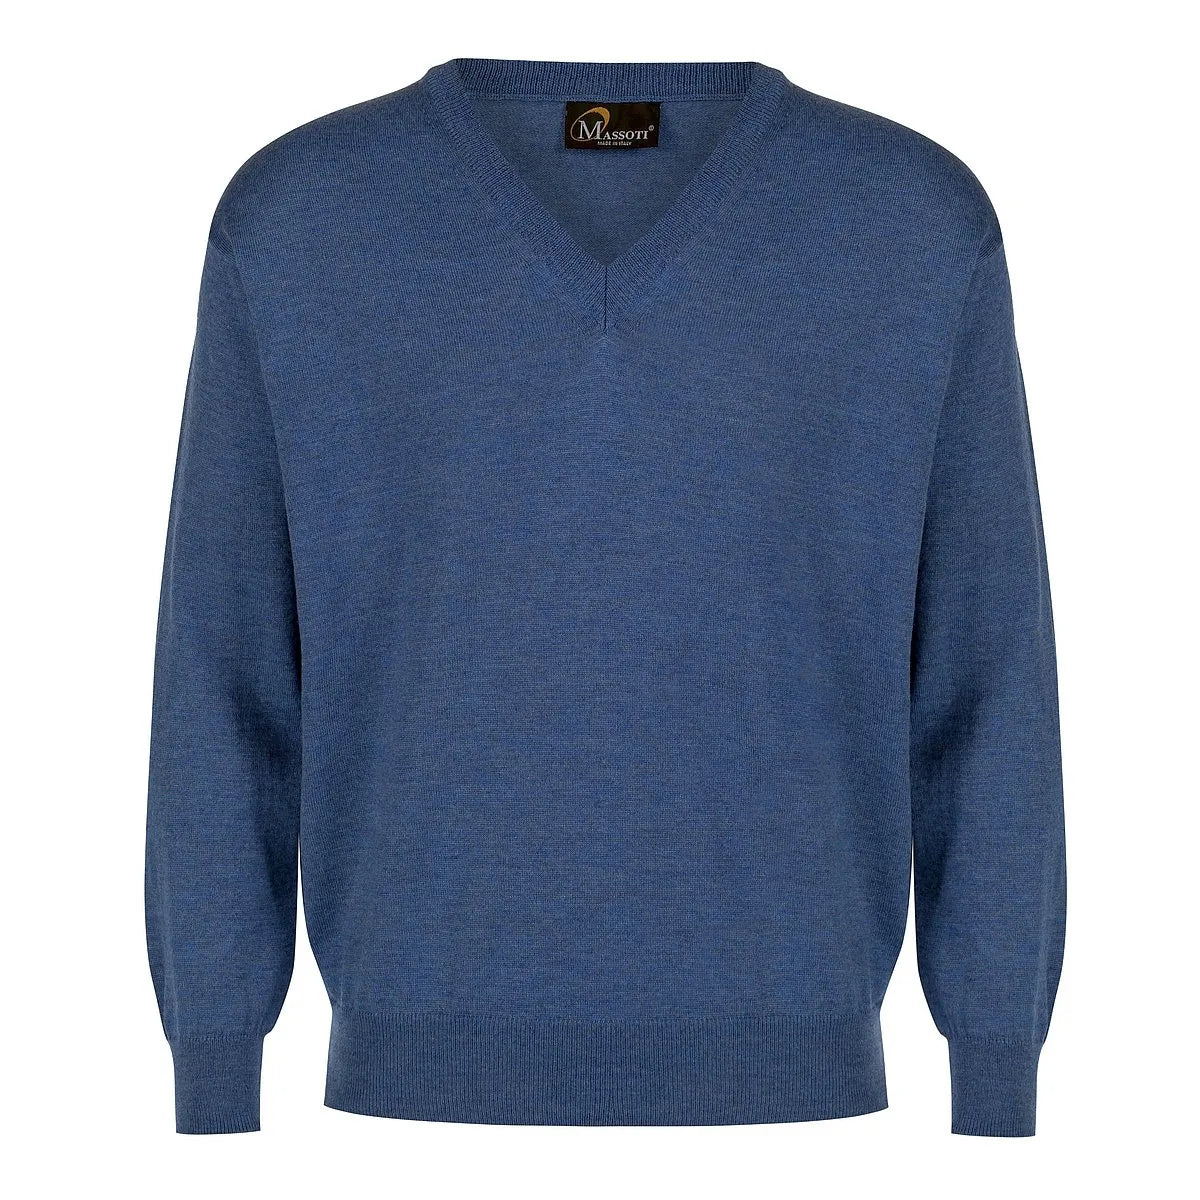 Massoti V-Neck Lightweight Sweater - Denim - 100% Merino Wool